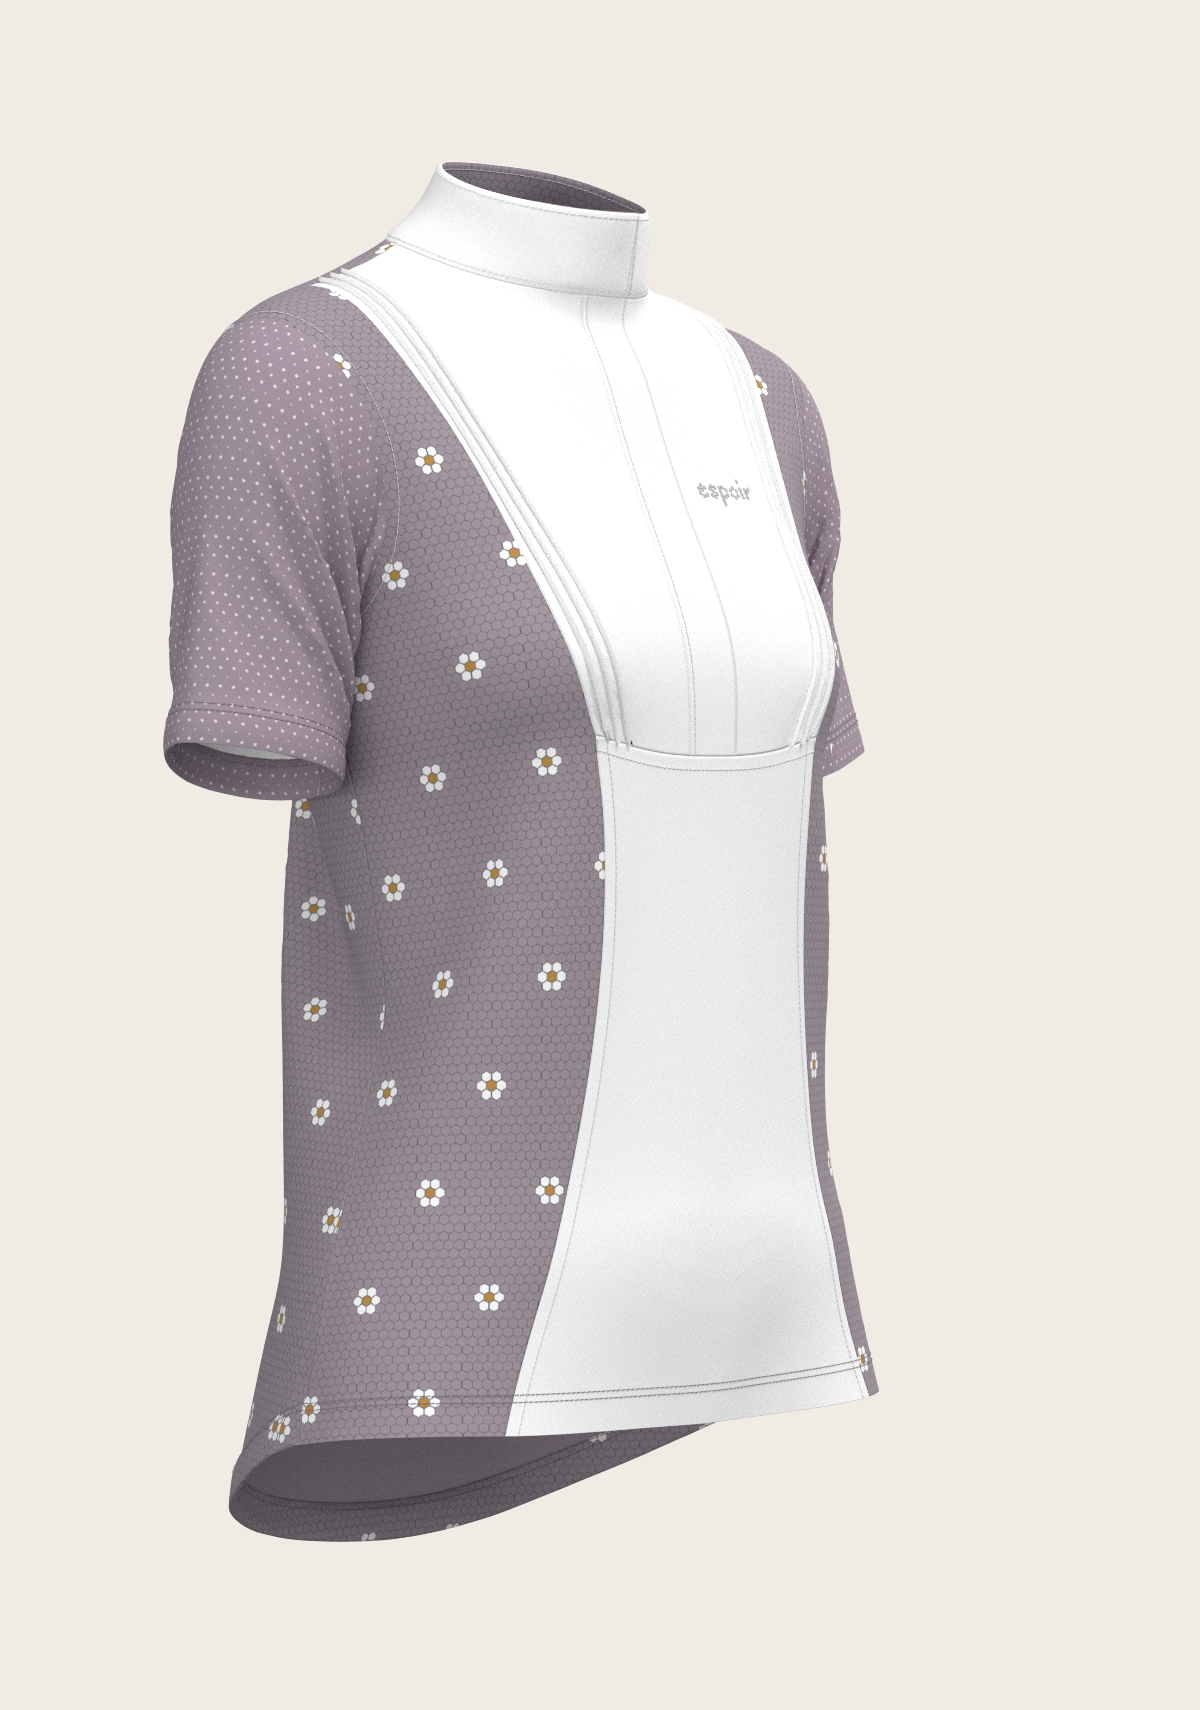 Mosaic Daises in Lavender Short Pleated Short Sleeve Show Shirt